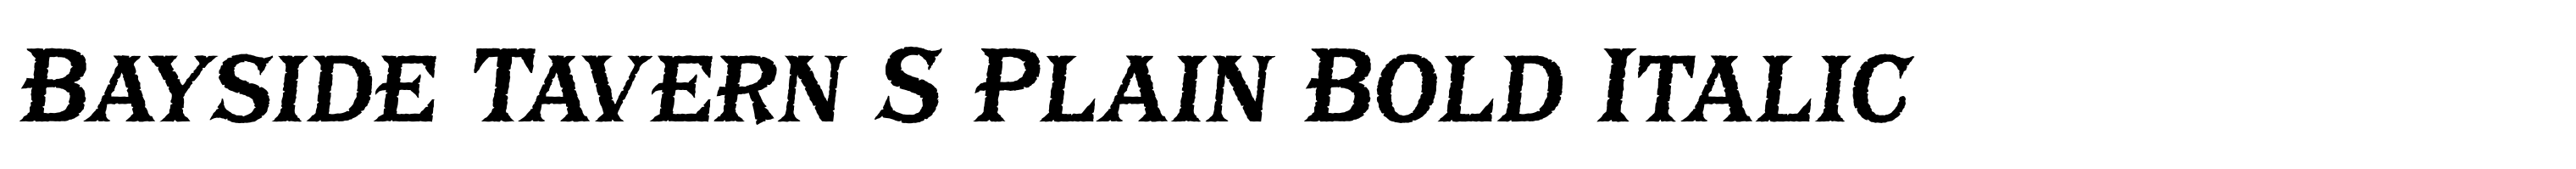 Bayside Tavern S Plain Bold Italic